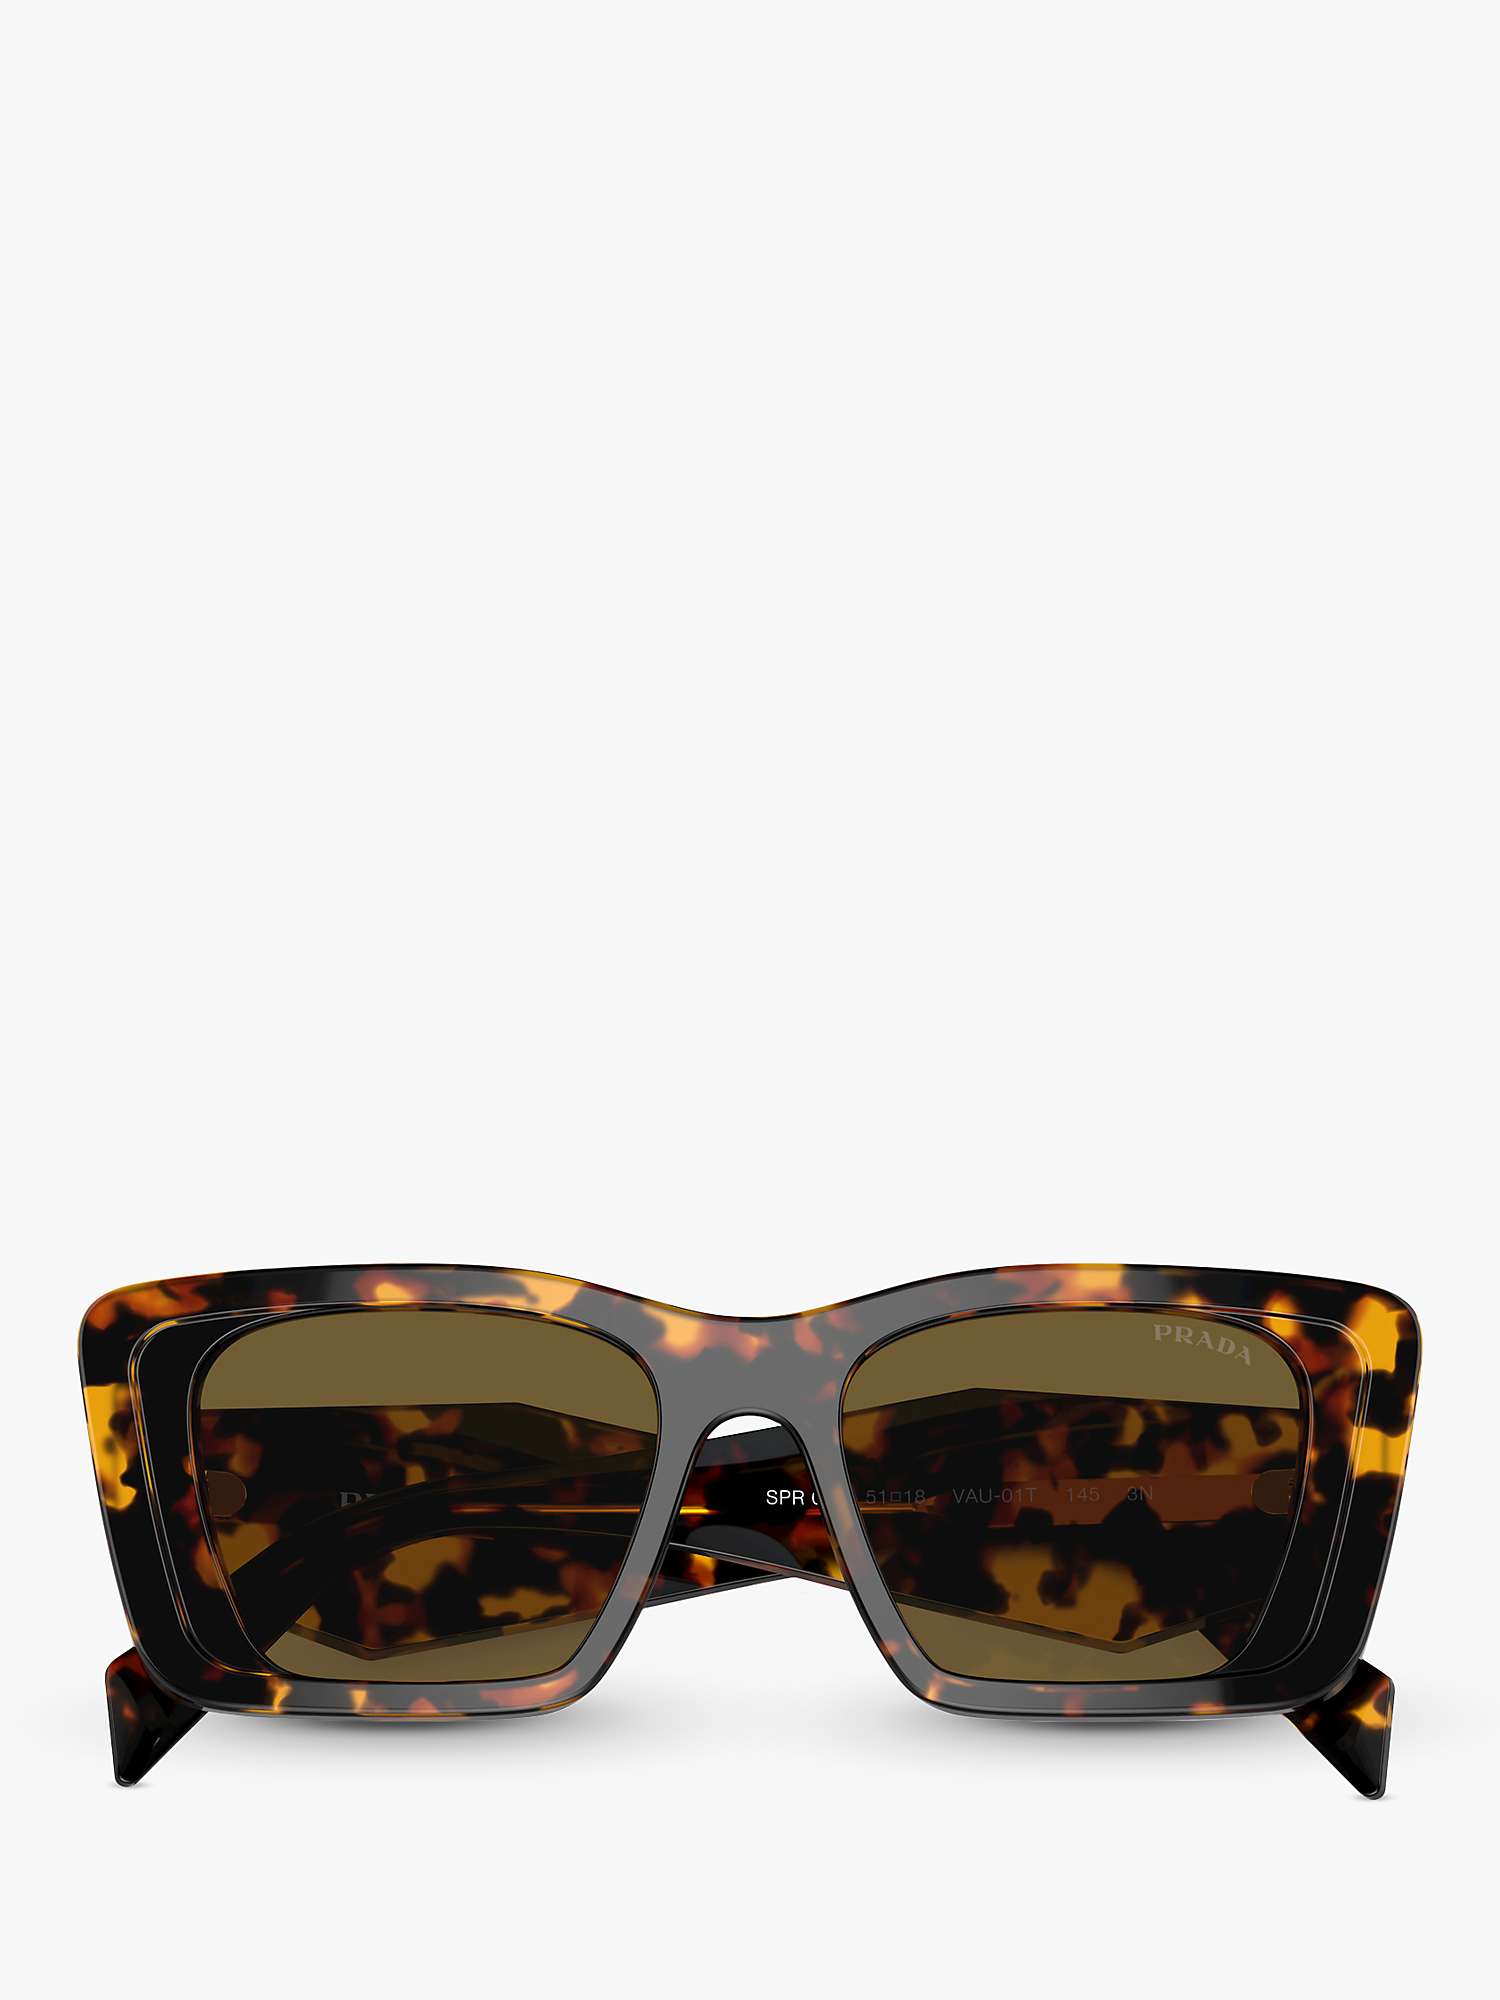 Buy Prada PR 08YS Women's Butterfly Sunglasses, Honey Tortoise/Brown Online at johnlewis.com